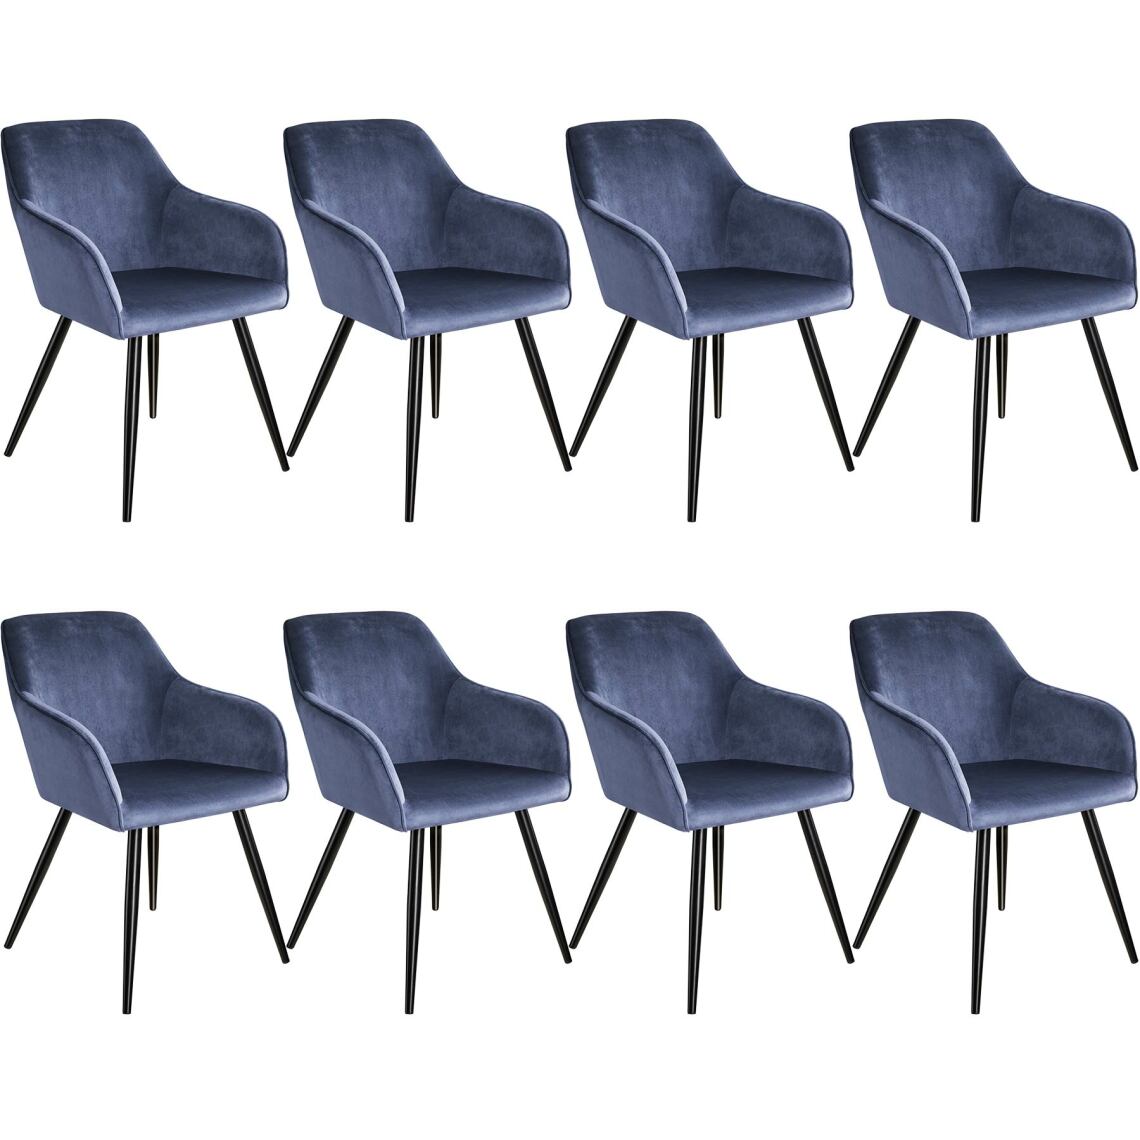 Tectake - 8 Chaises MARILYN Design en Velours Style Scandinave - bleu/noir - Chaises